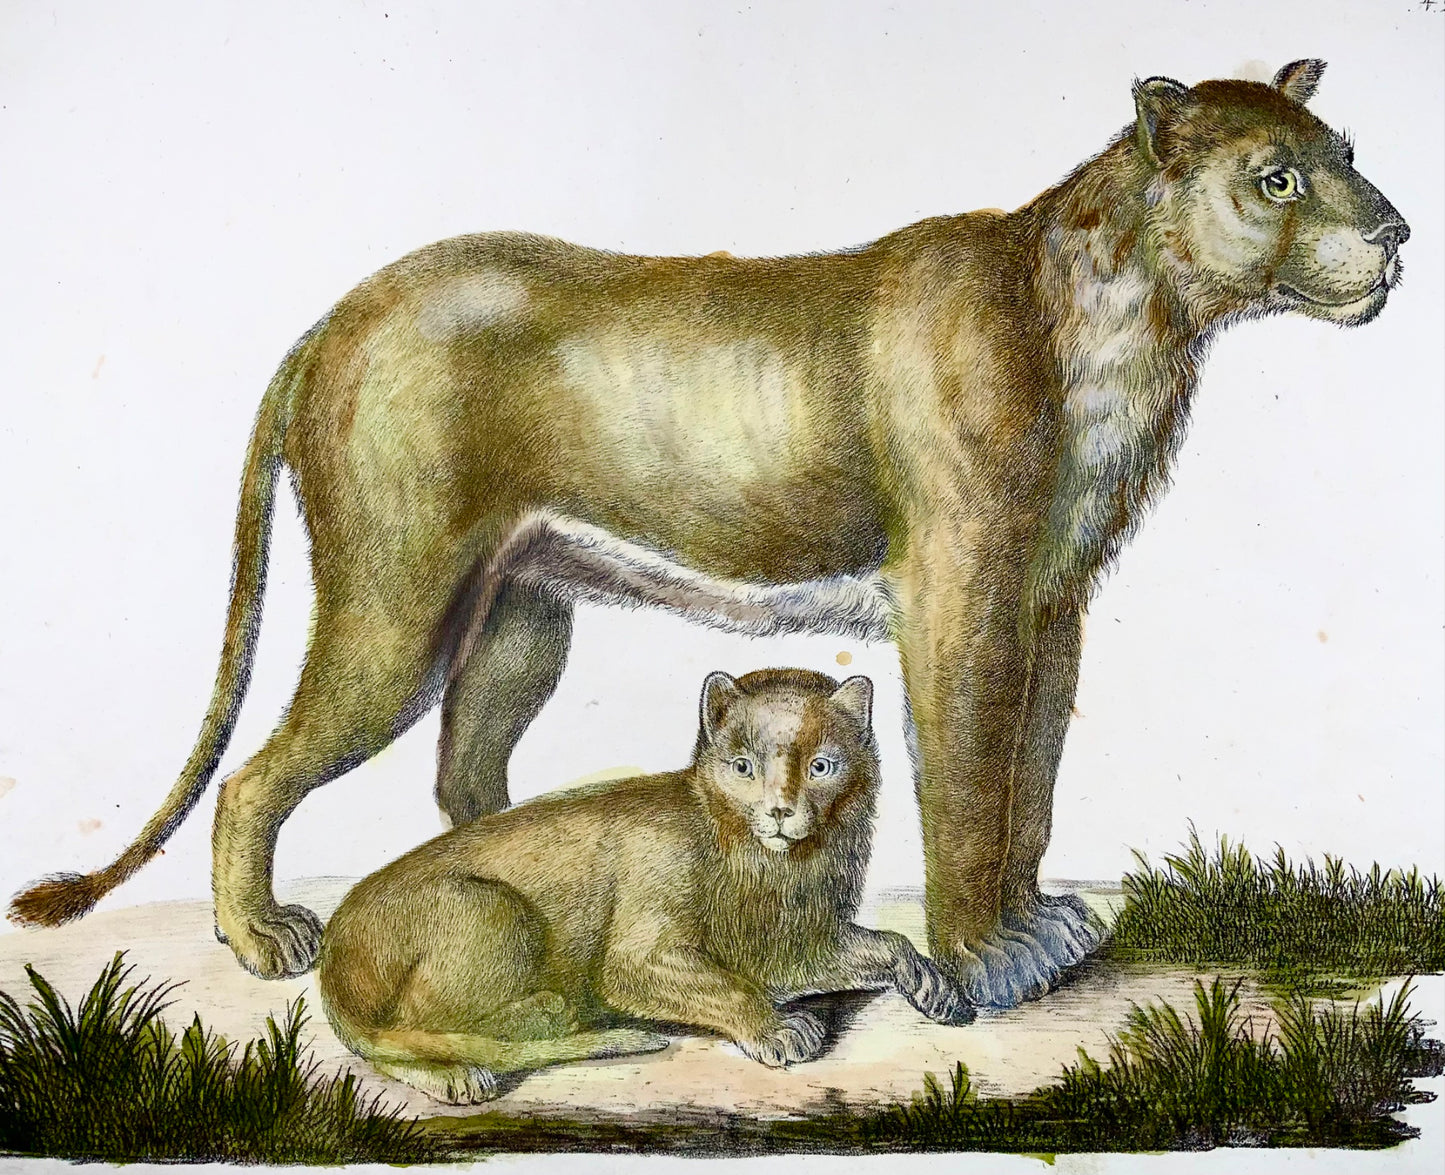 1816 Lioness, Brodtmann, Imp. folio 42.5 cm, incunabula of lithography